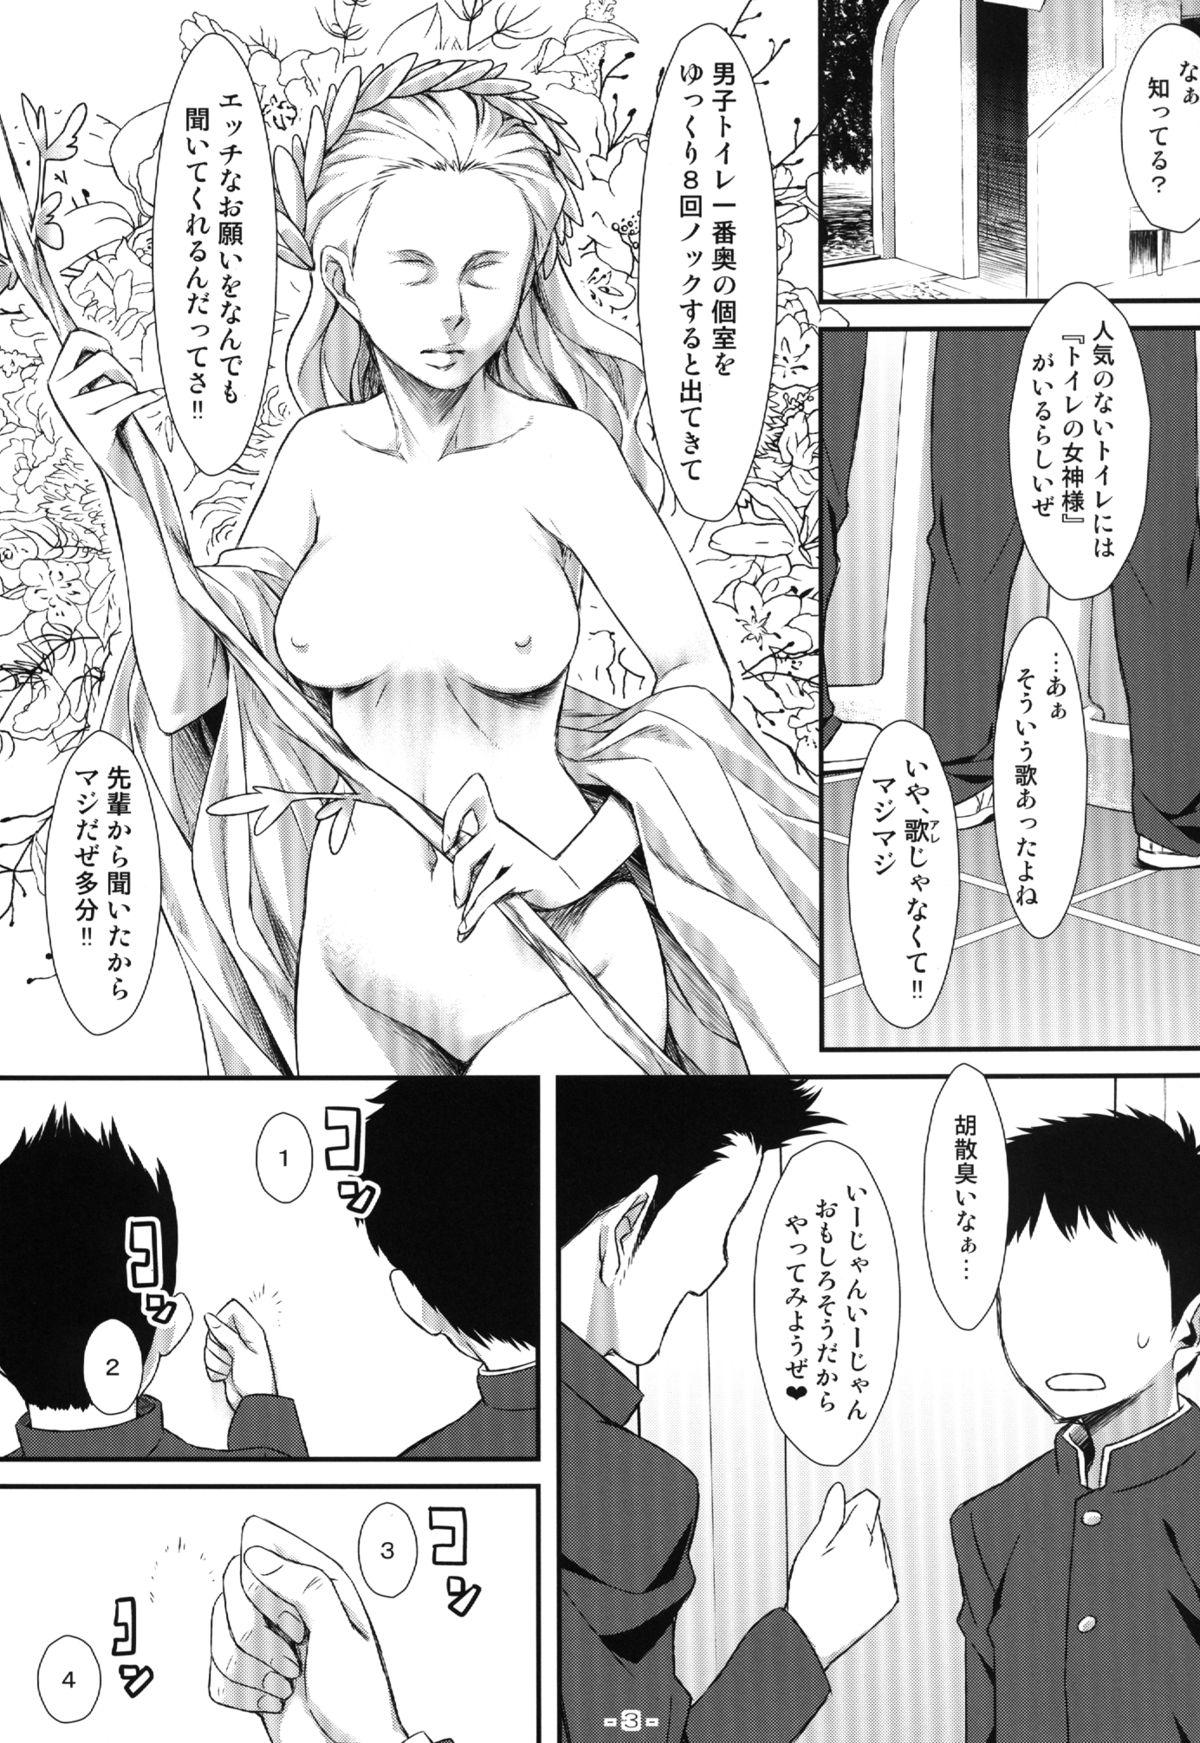 Boy Yasei no Chijo ga Arawareta! 7 - Touhou project Lesbos - Page 3